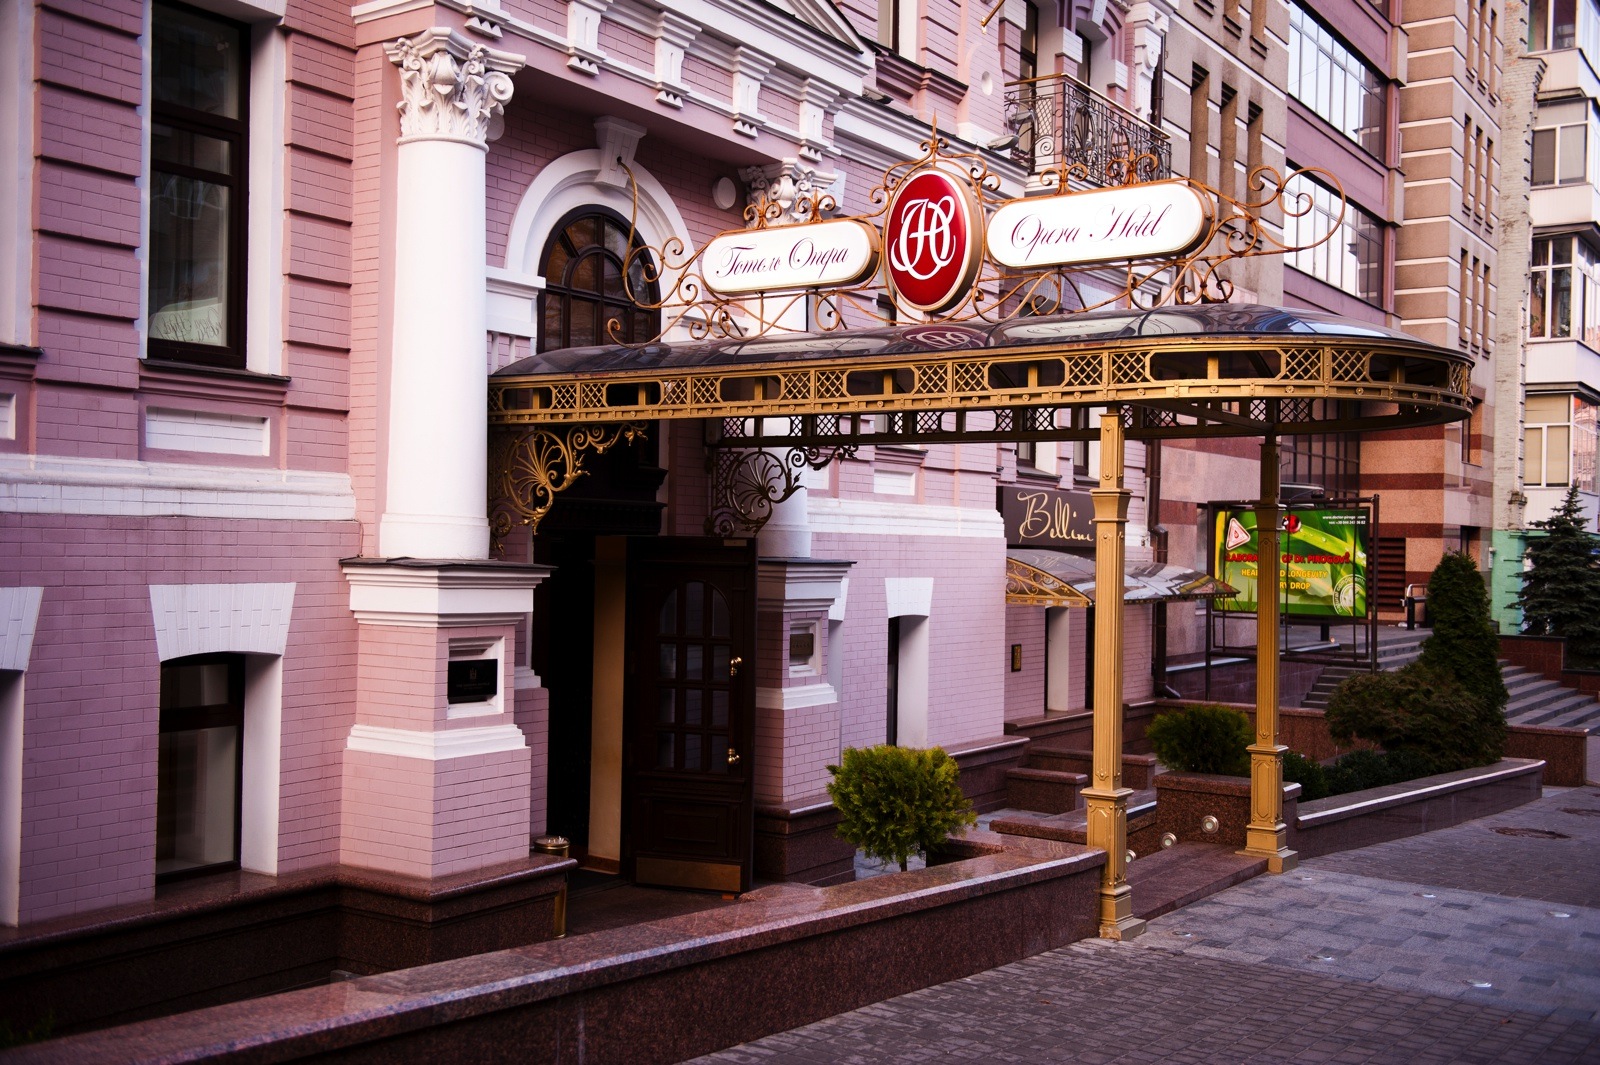 Opera Hotel